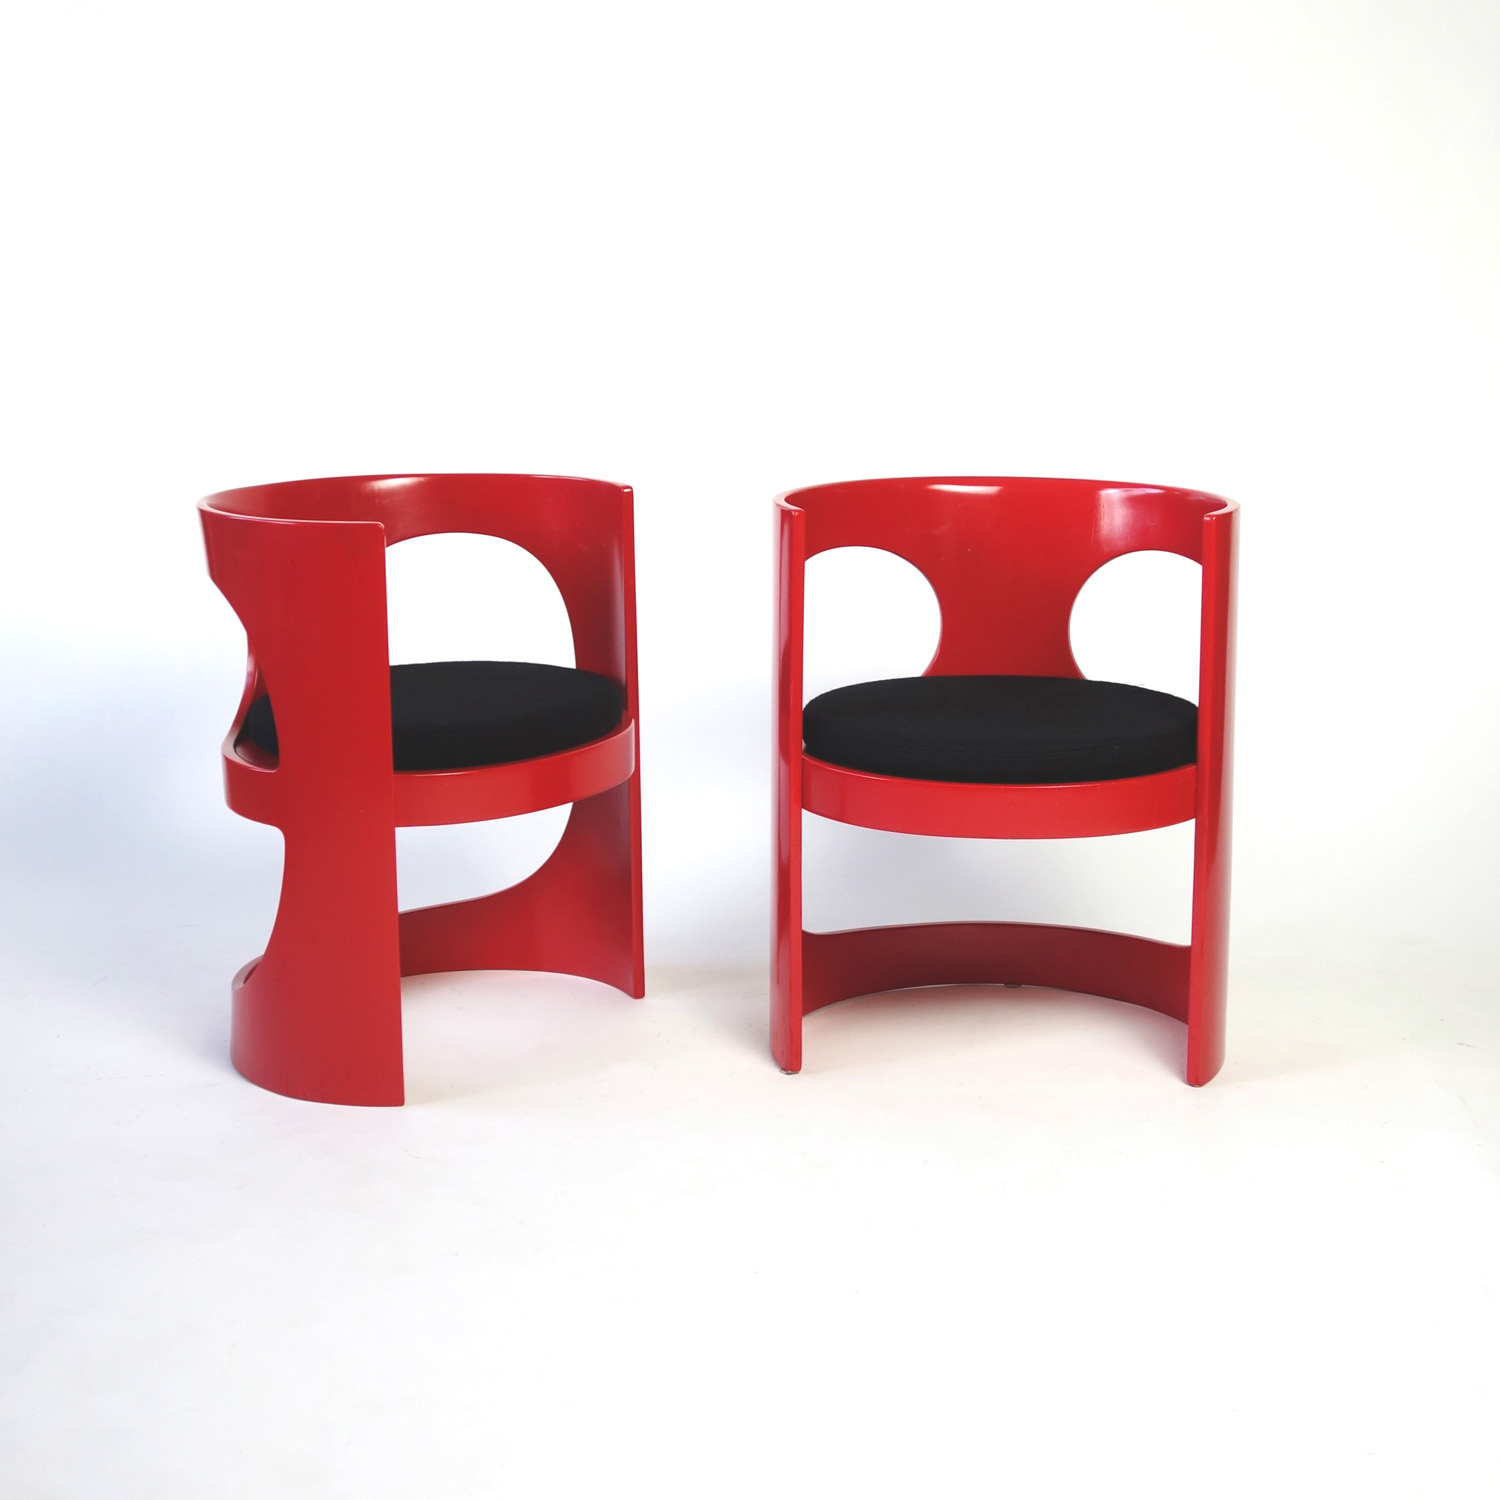 Rare Pair of Arne Jacobsen "Pre Pop" Chairs